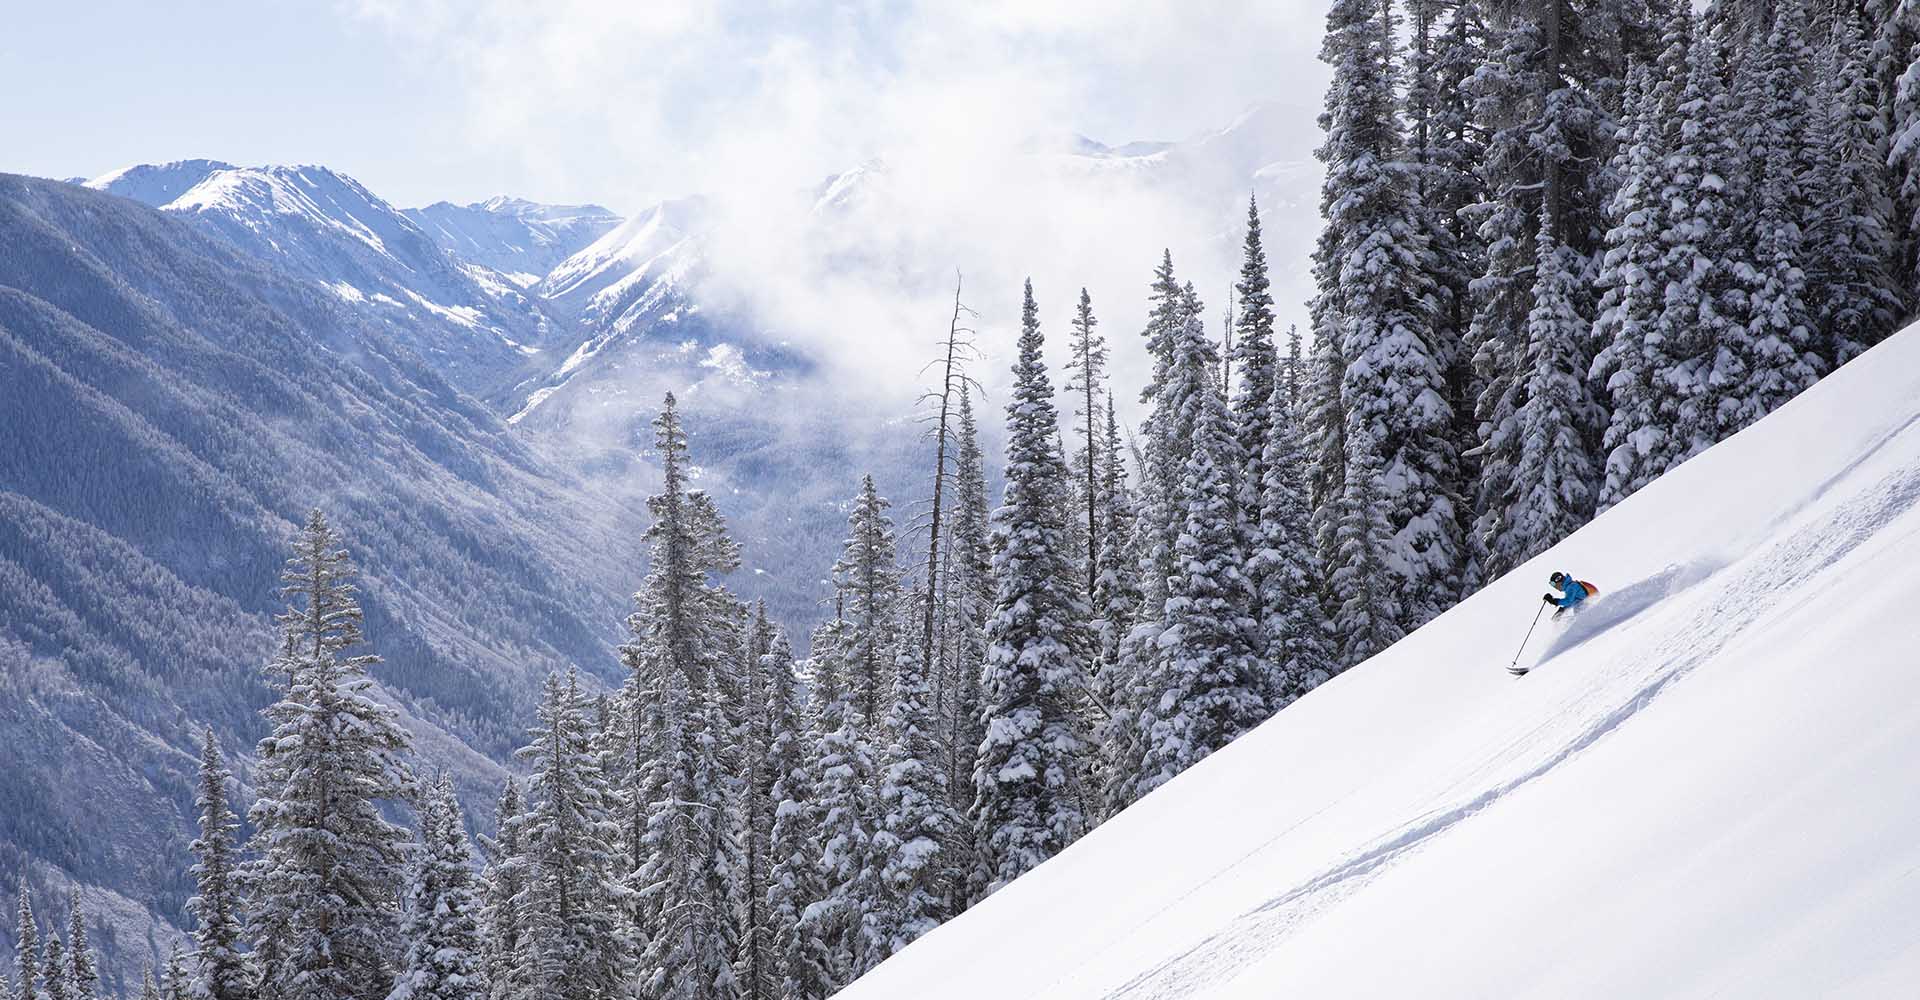 A skier enjoys perfect powder conditions on Aspen Mountain.